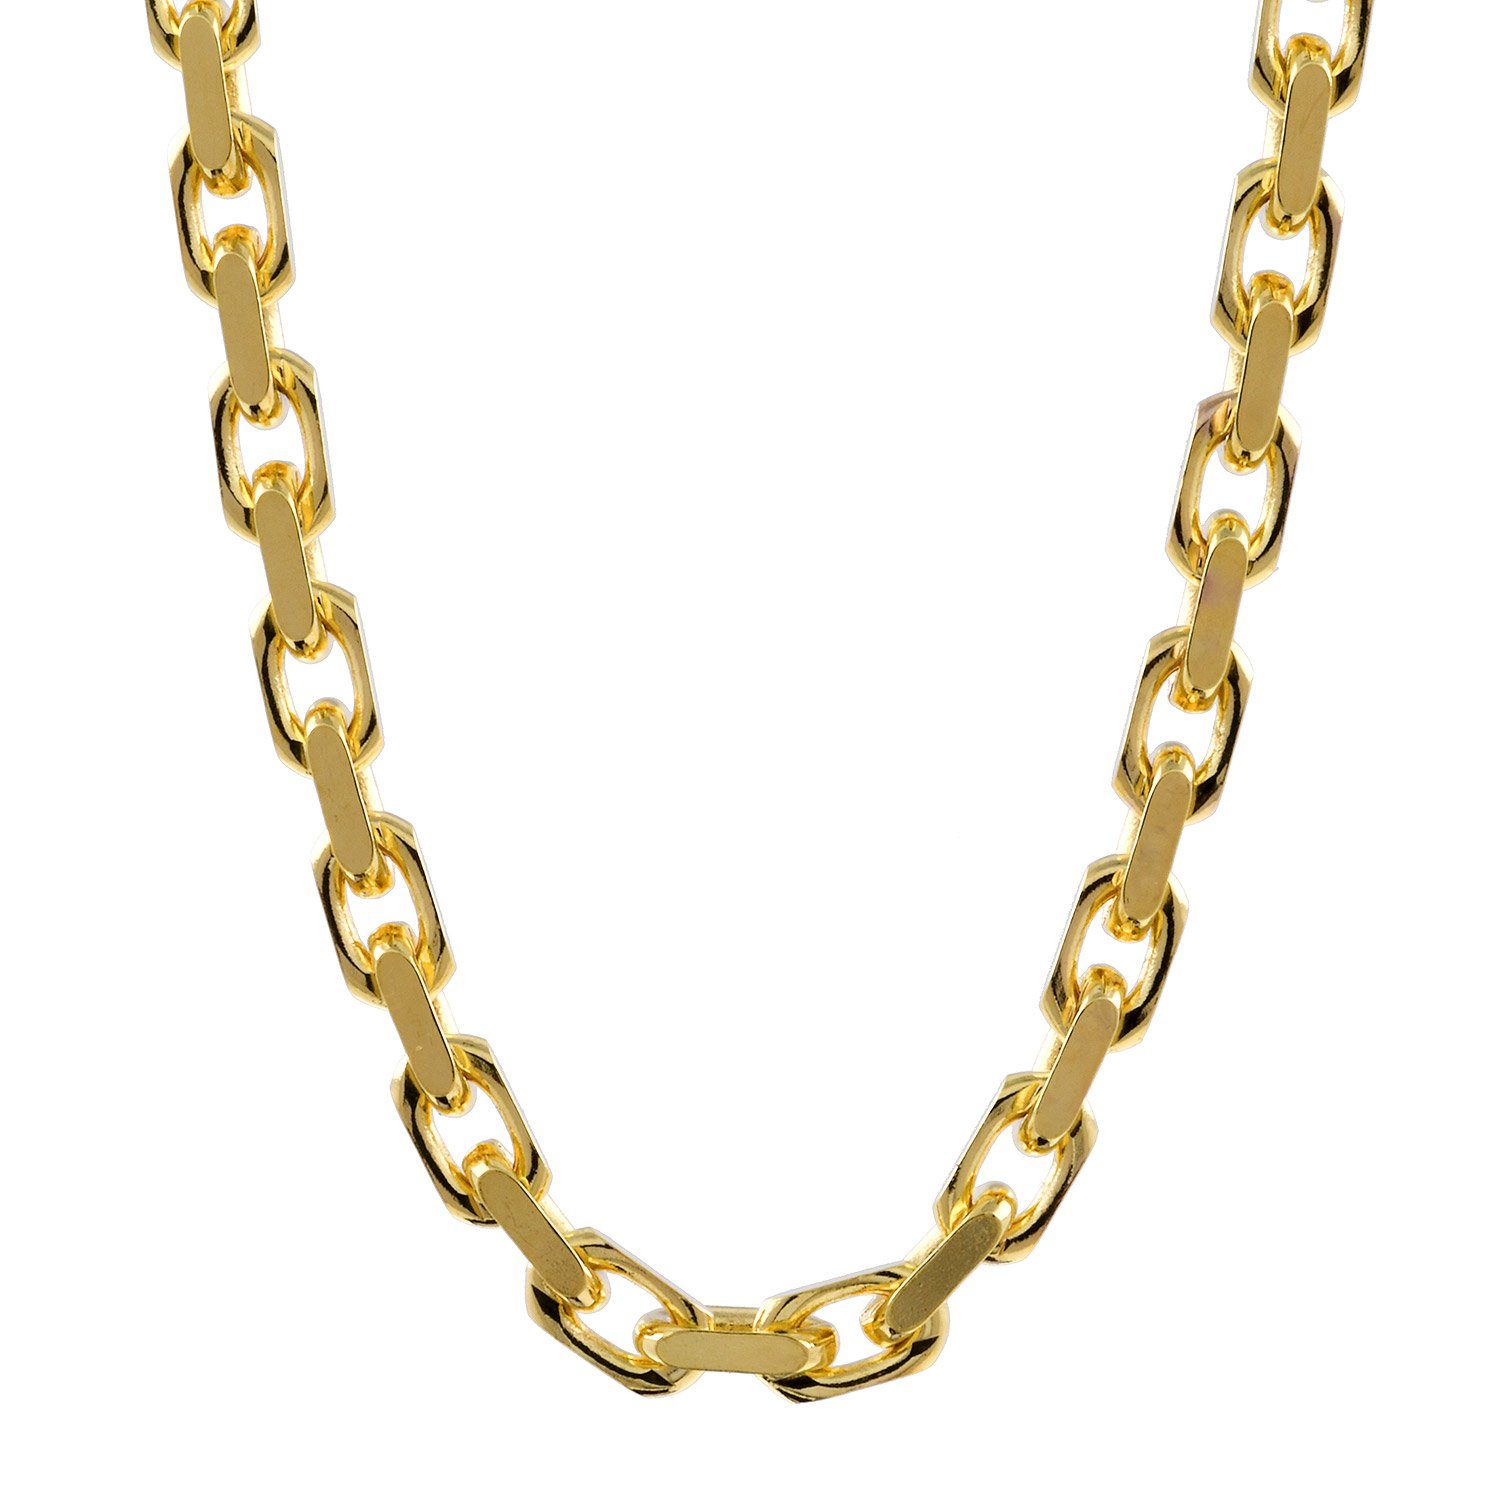 HOPLO Goldarmband Ankerkette diamantiert Довжина 18,5cm - Breite 1,8mm - 333-8 Karat Gold